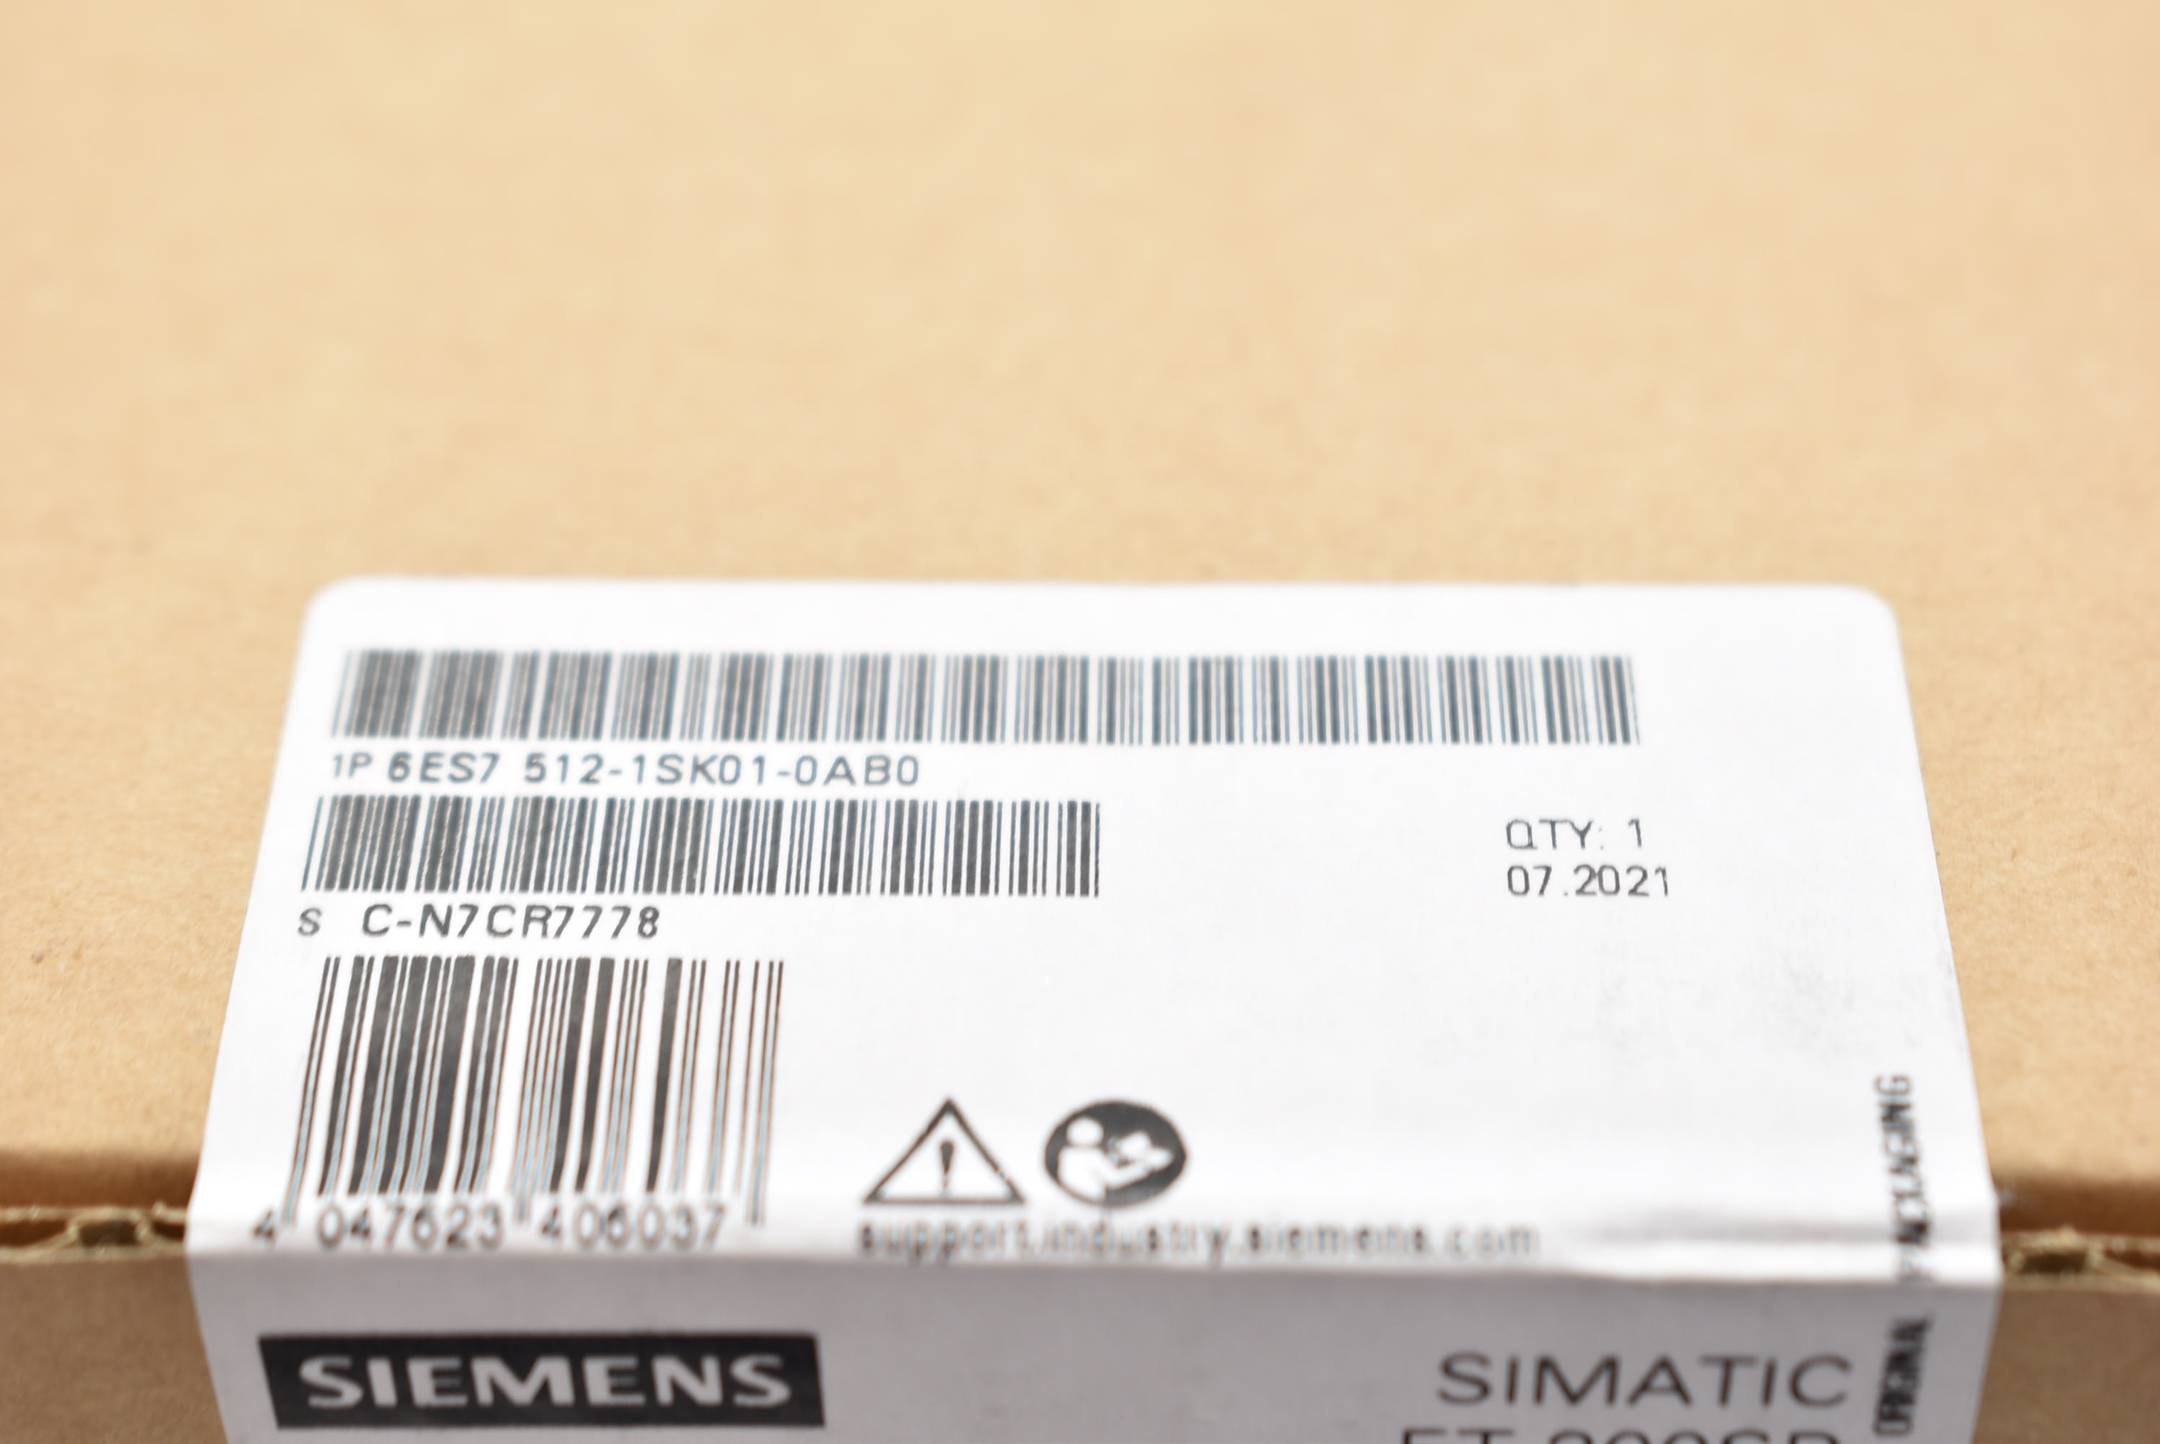 Siemens simatic ET 200SP 6ES7 512-1SK01-0AB0 ( 6ES7512-1SK01-0AB0 ) FS.07